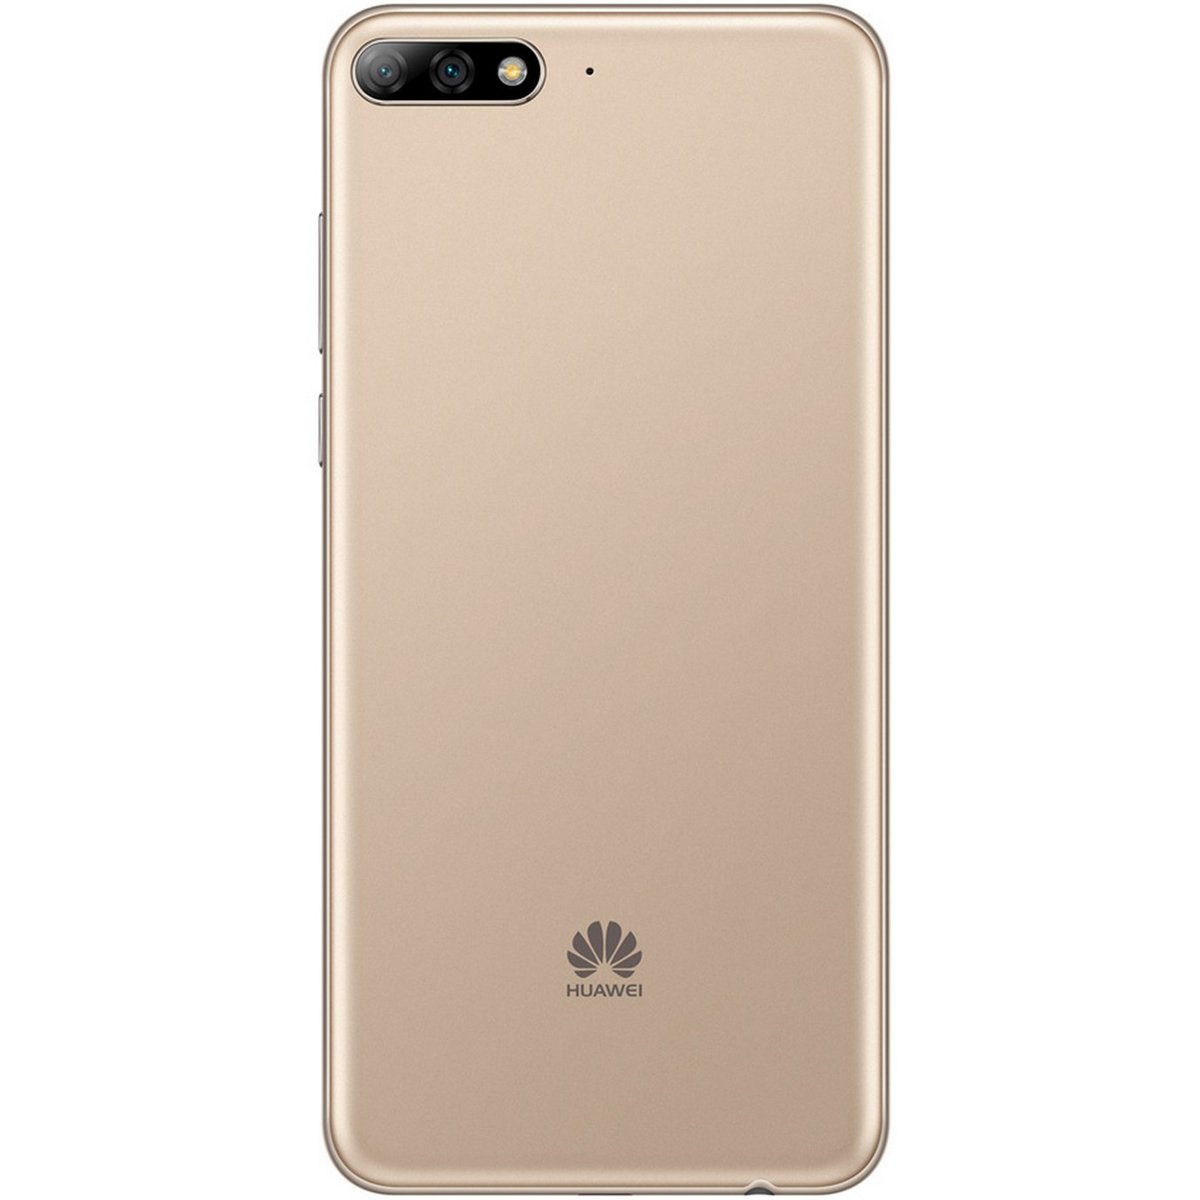 Huawei Y7 Prime2018 32GB Gold